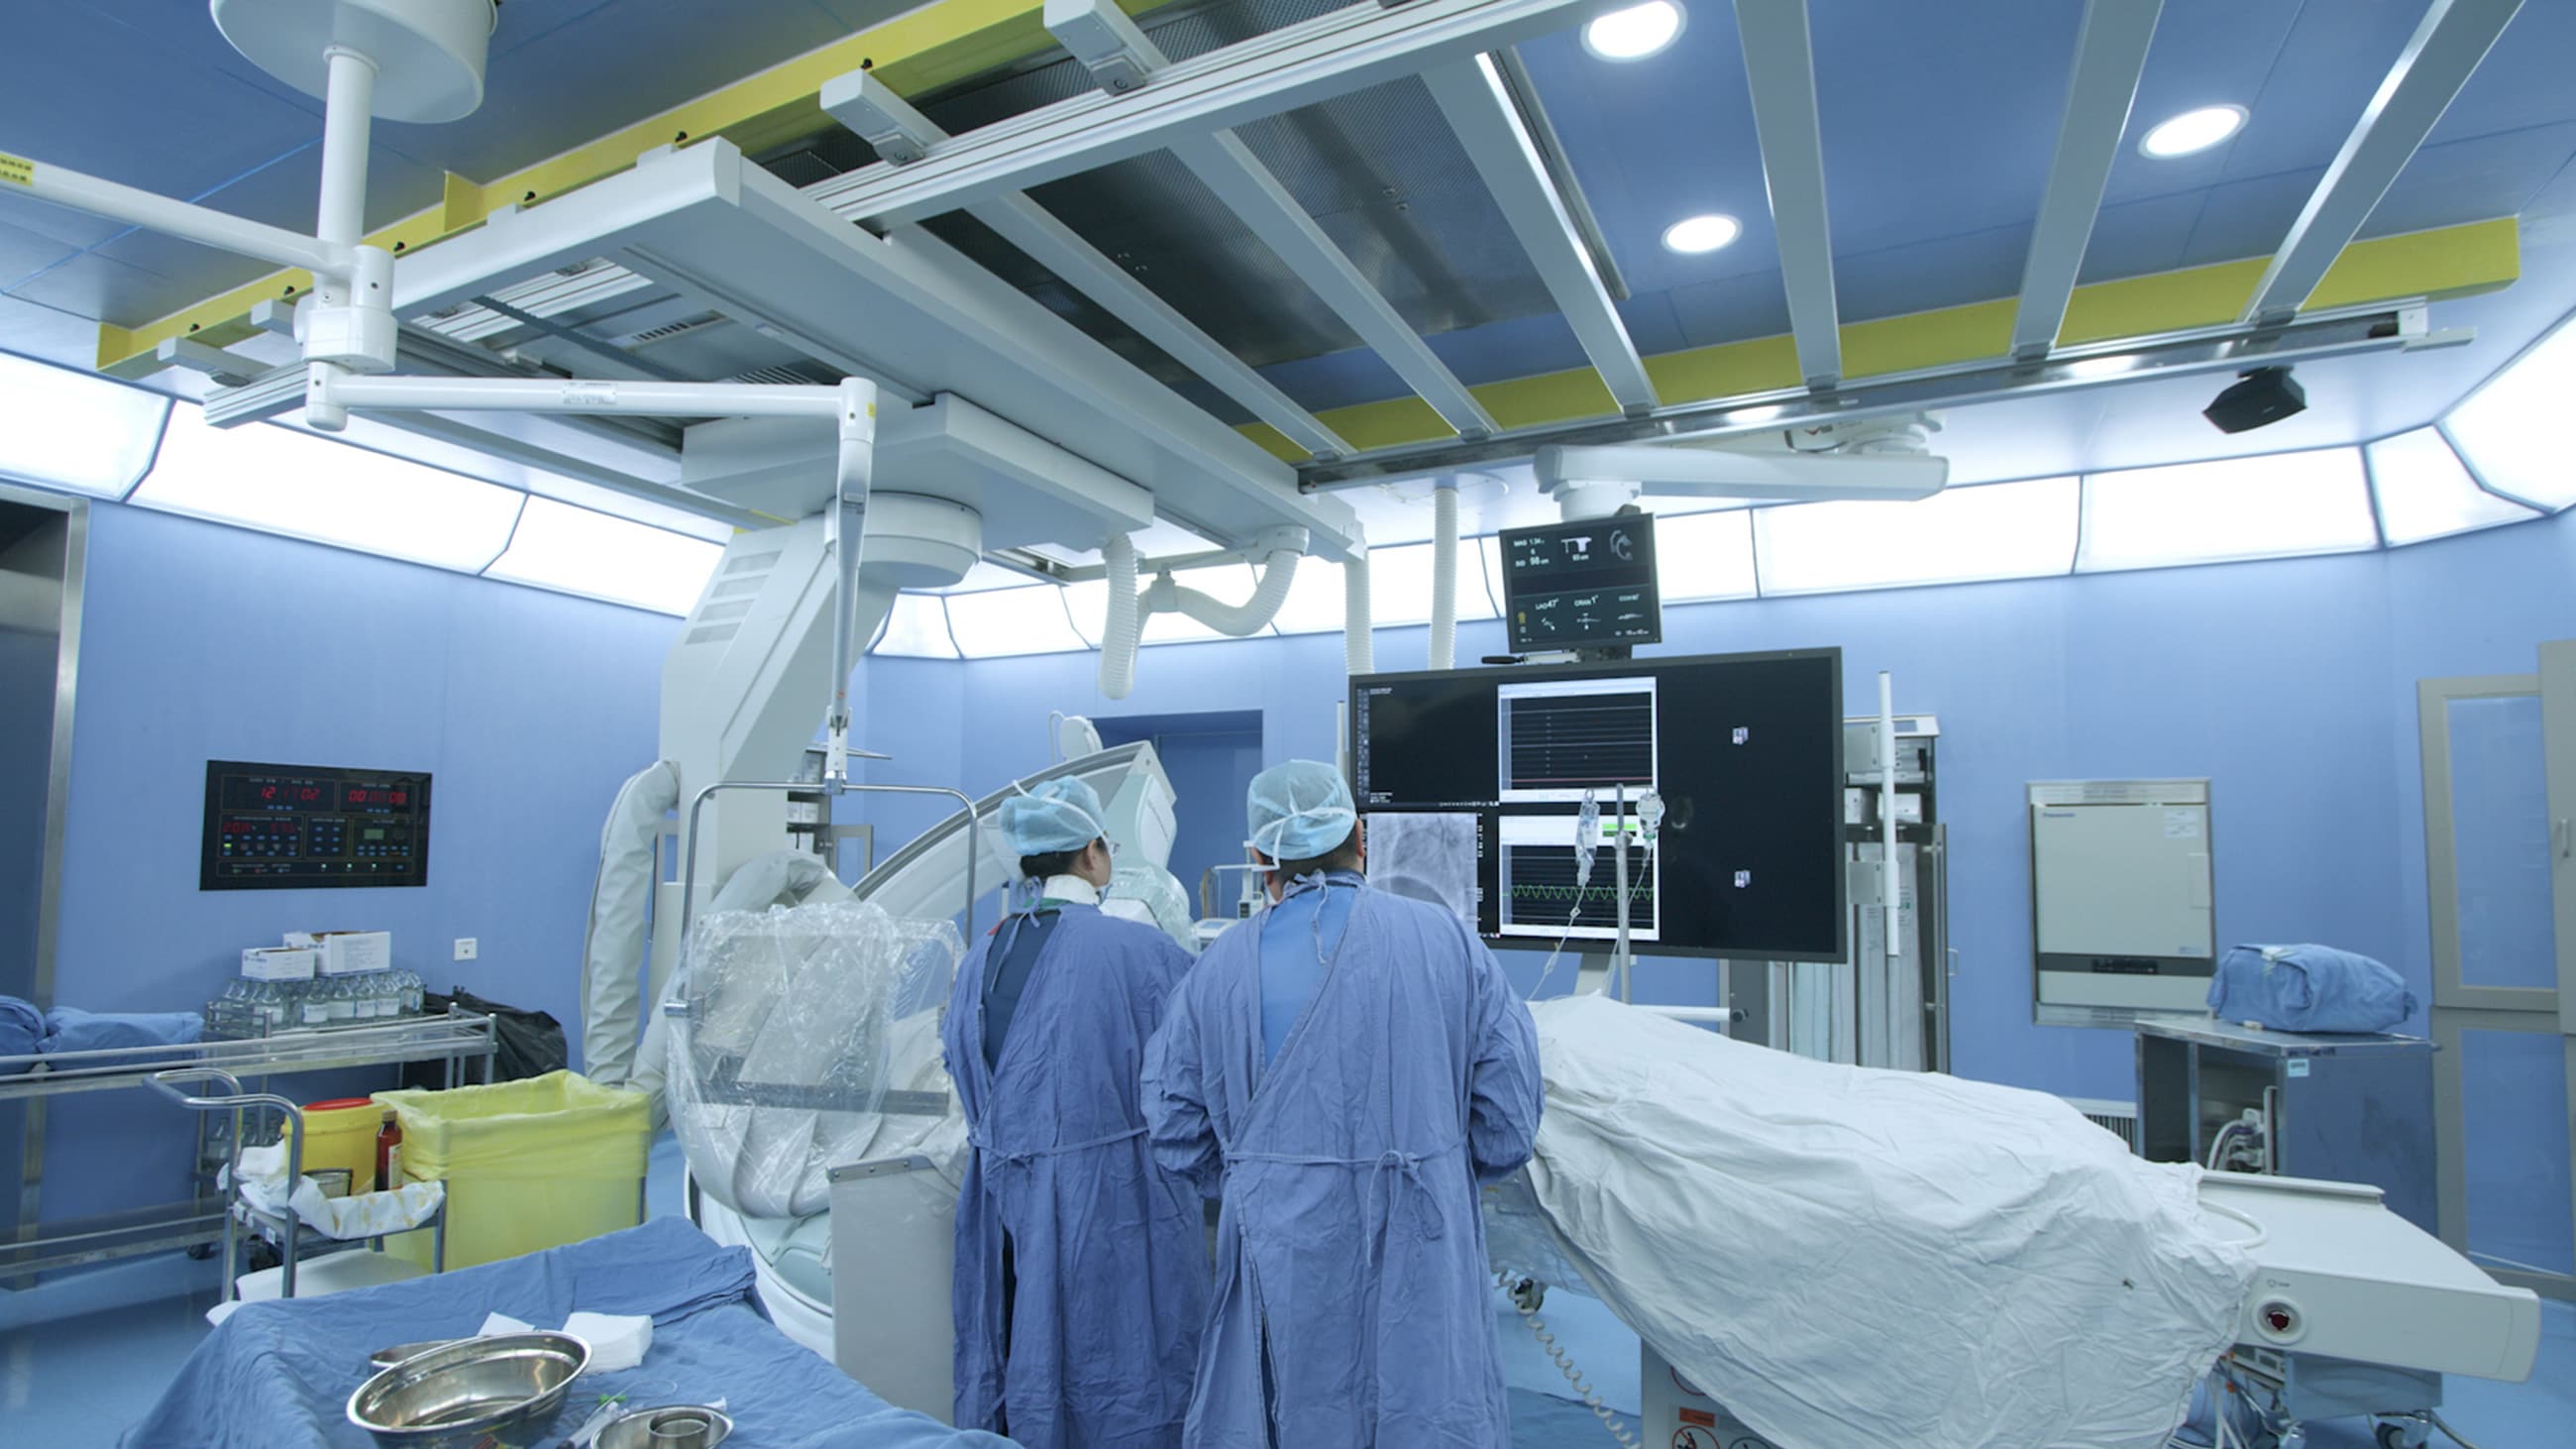 Use of Shimadzu’s Trinias Technology at Zhongshan Hospital in Shanghai